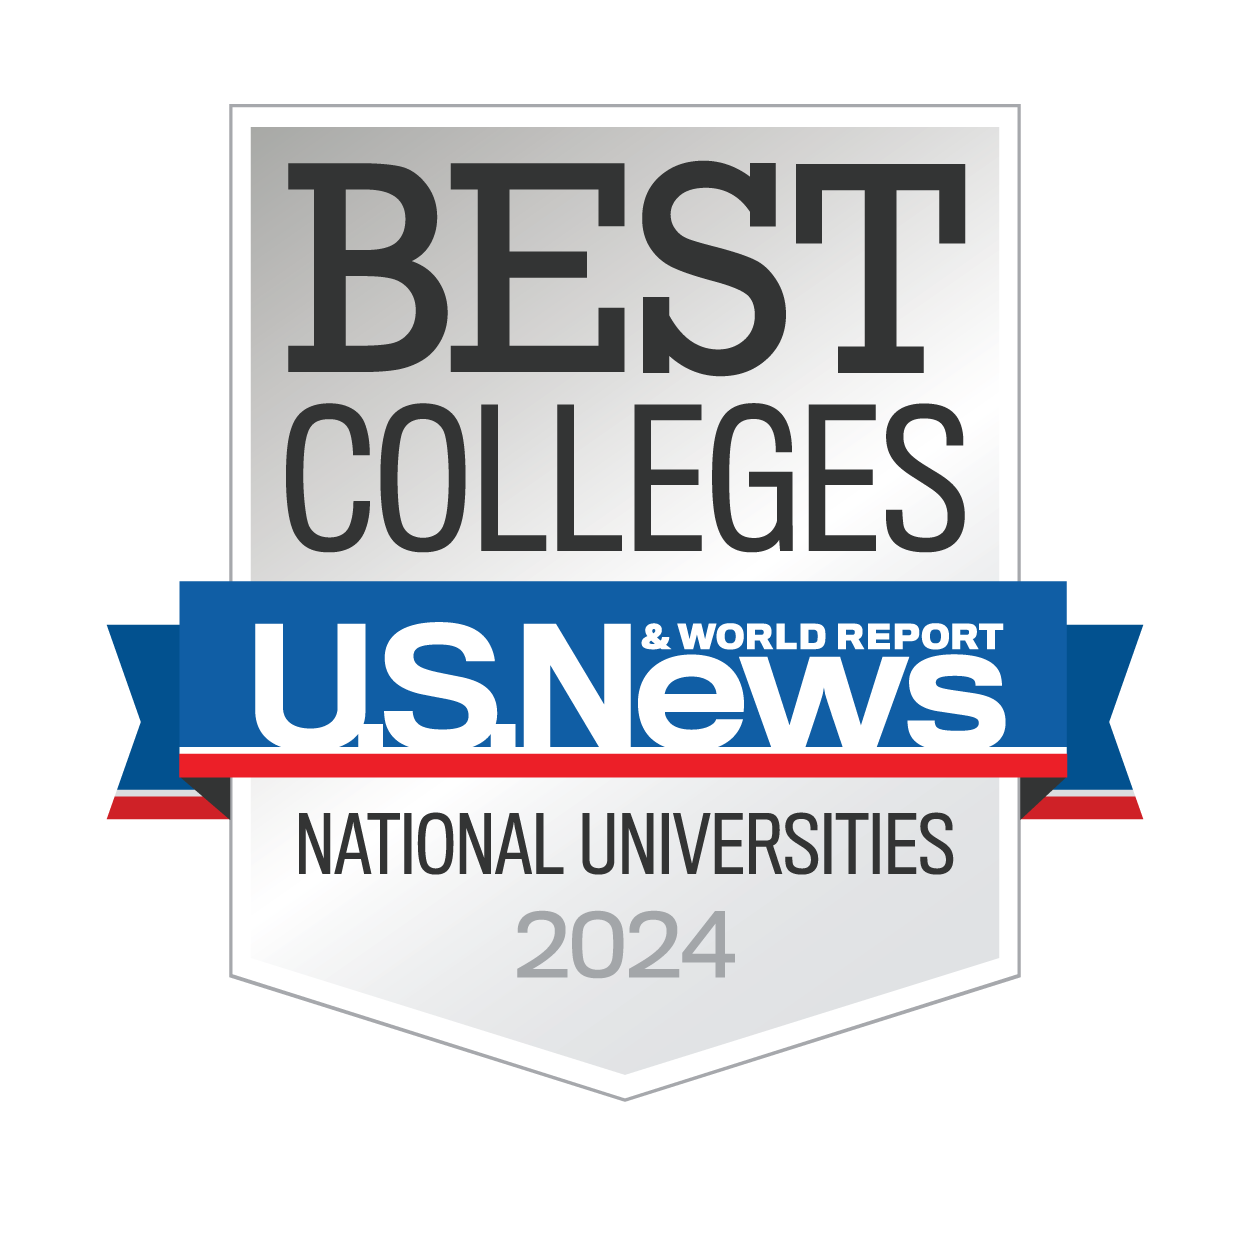 national universites 2024 badge